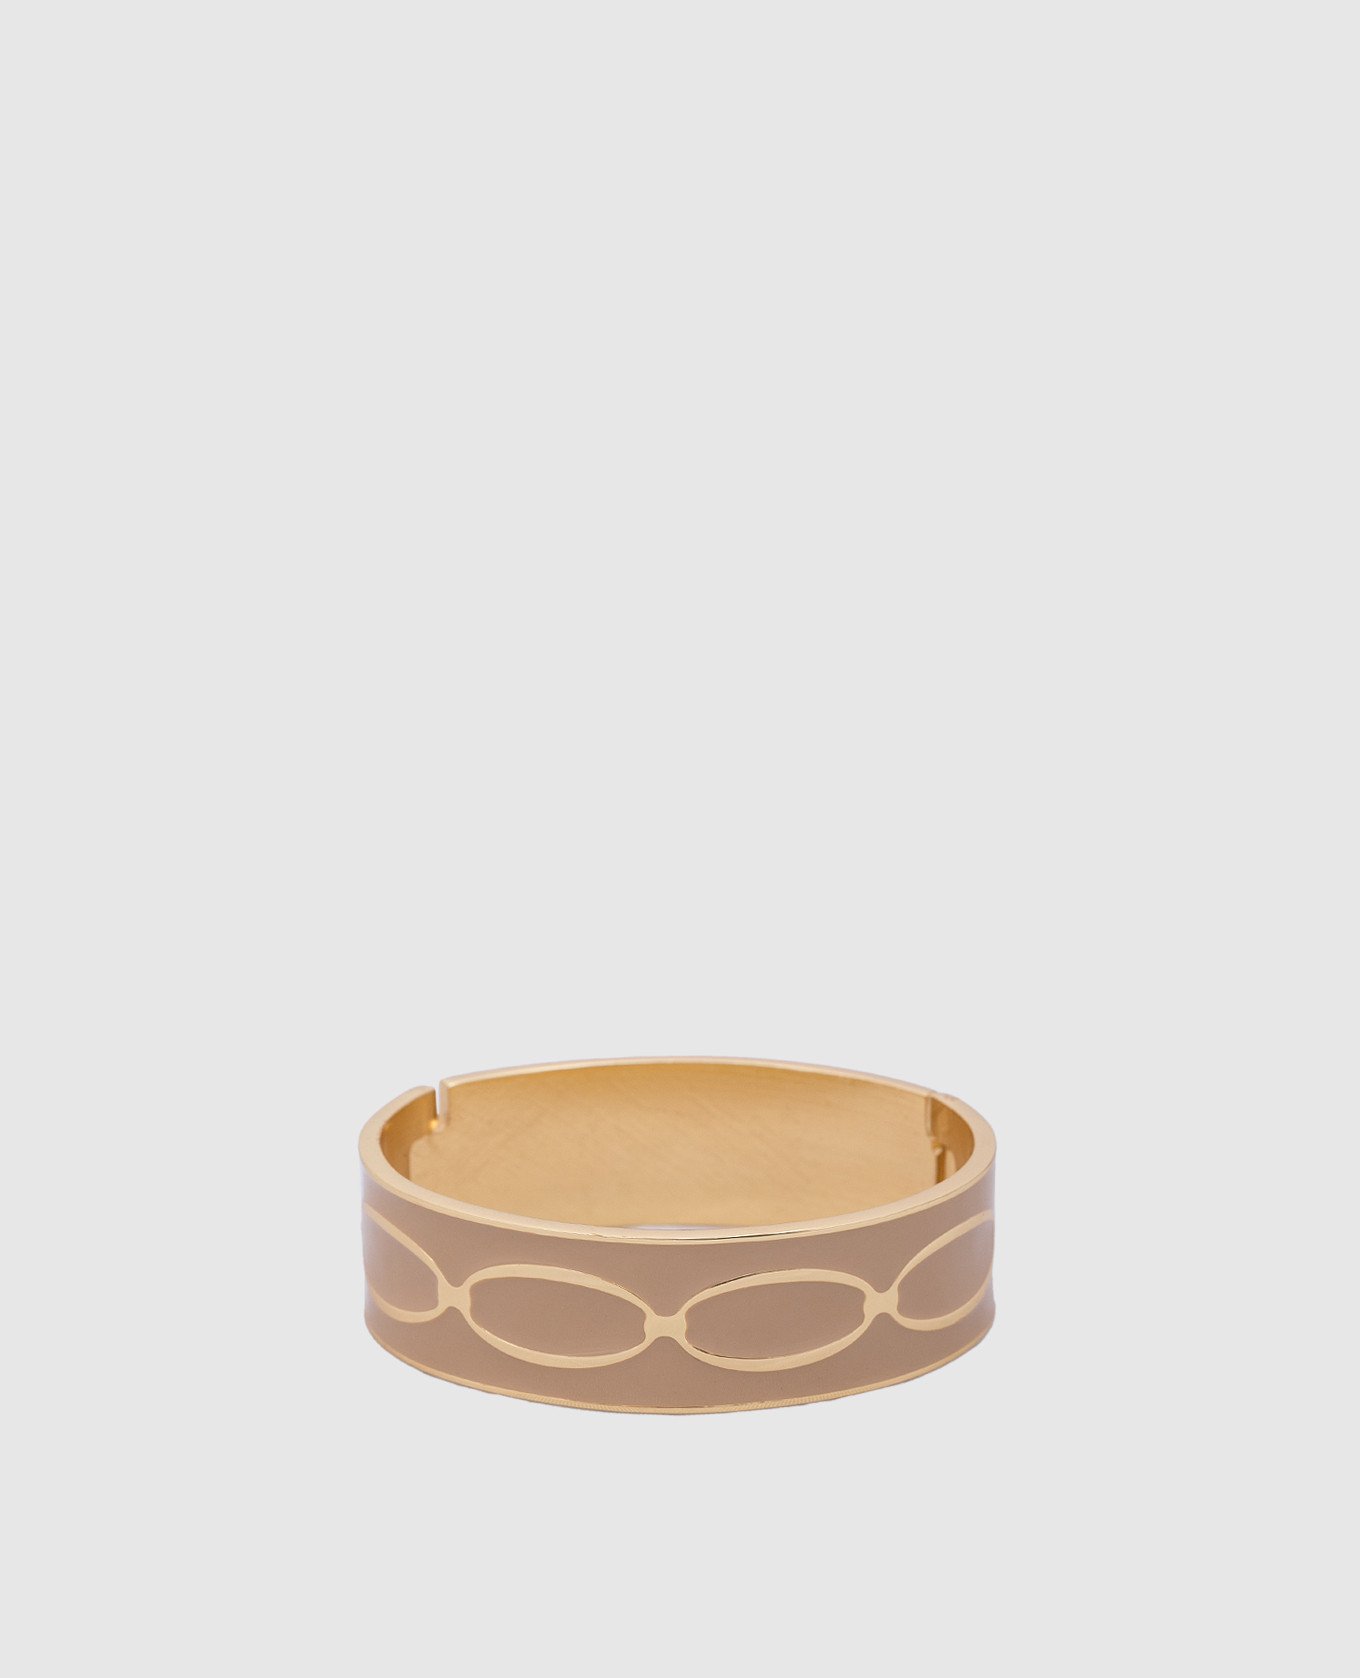 Brown Knot bracelet with 24k gold plating